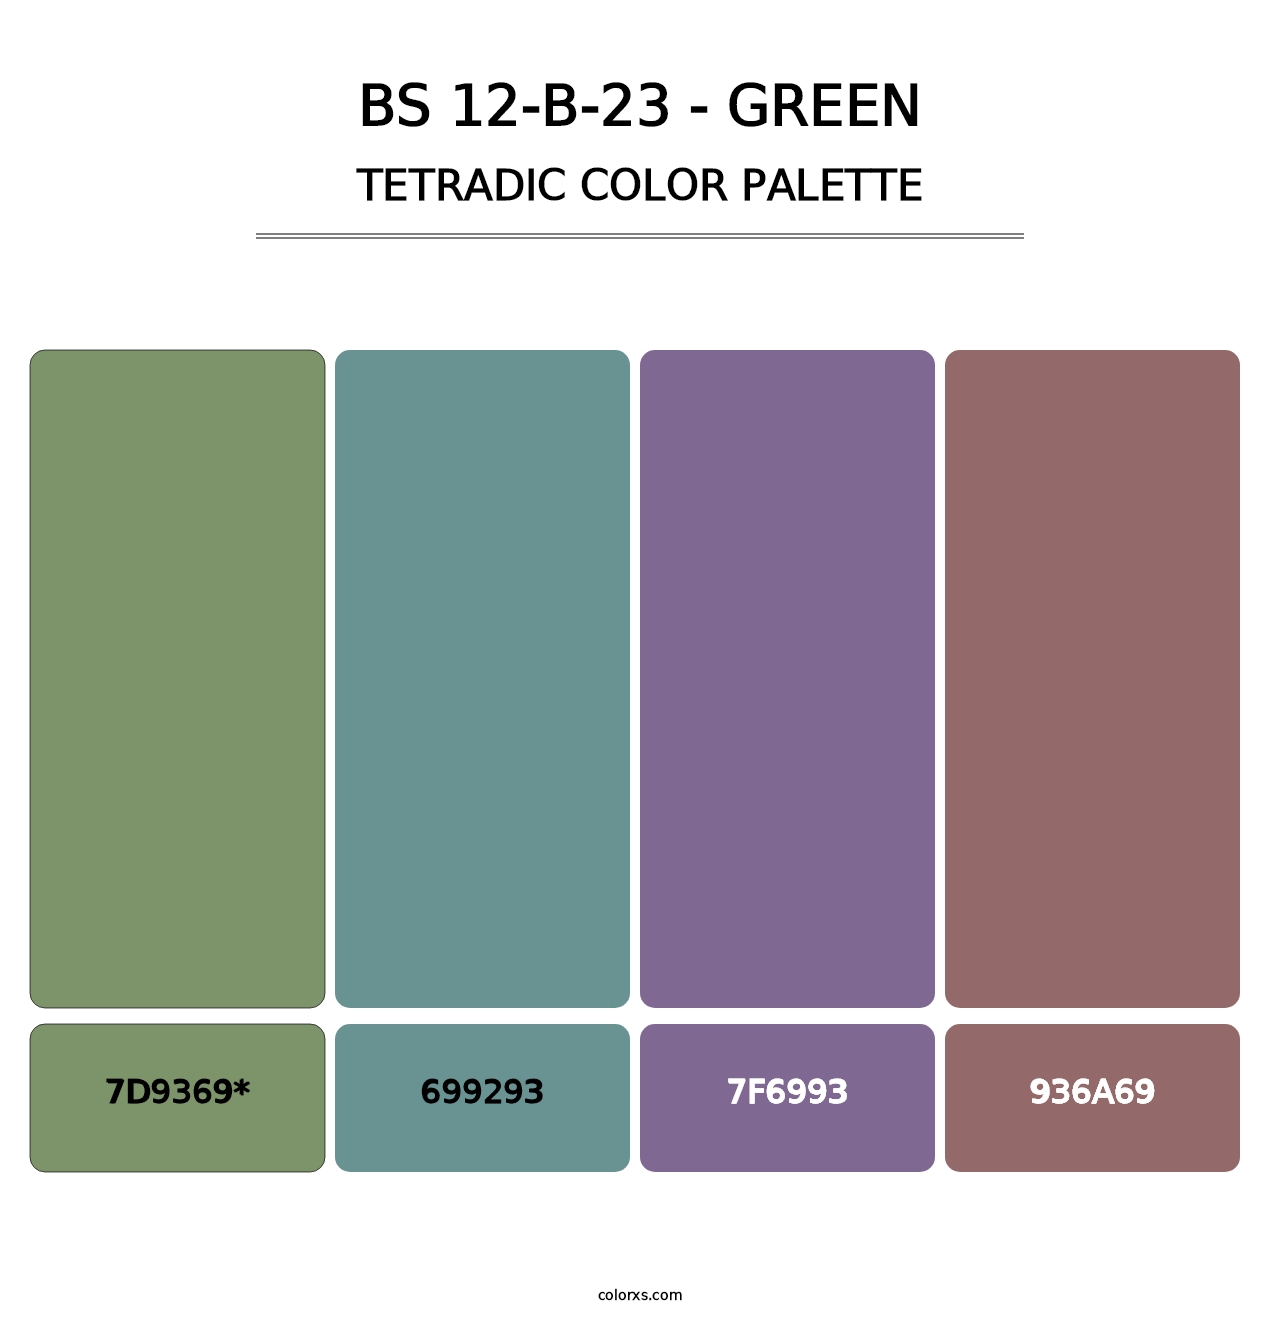 BS 12-B-23 - Green - Tetradic Color Palette